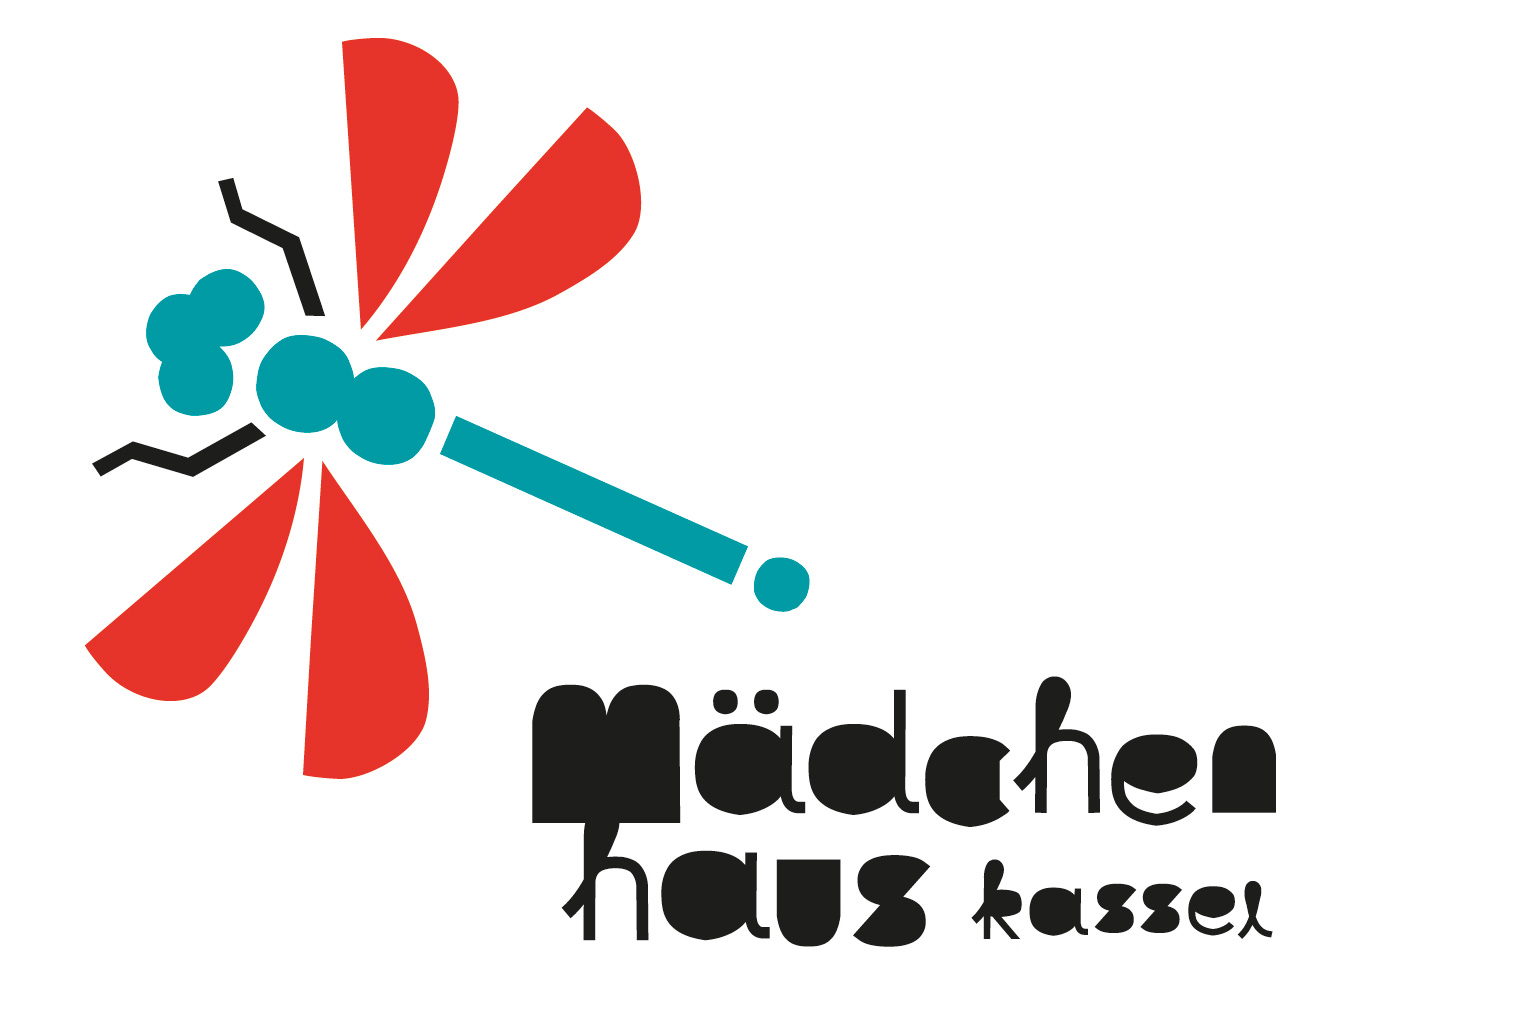 Logo Mädchenhaus Kassel